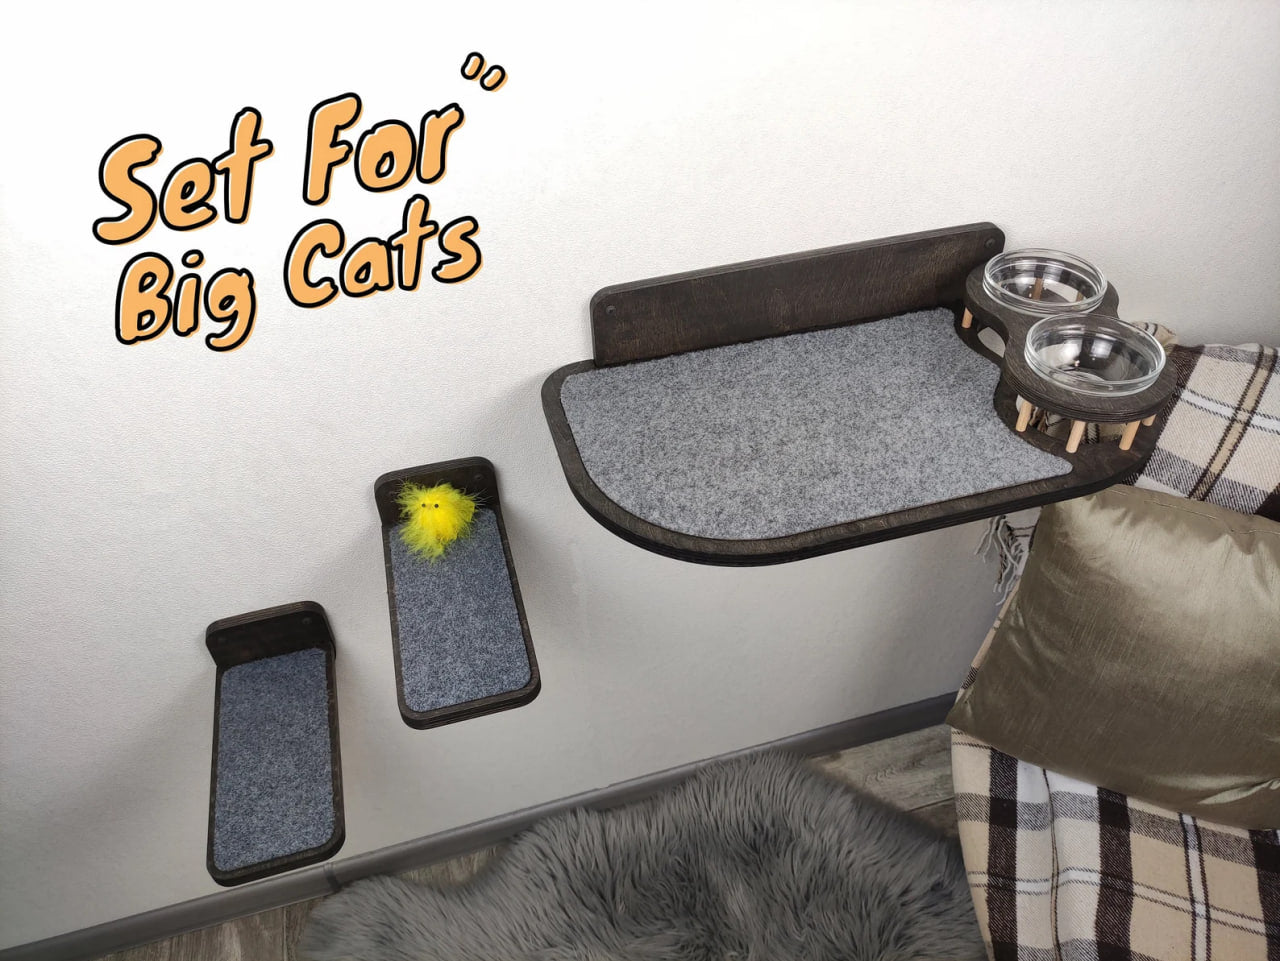 Cat feeder set for big cats - Dark & raised bowls plus 2 steps